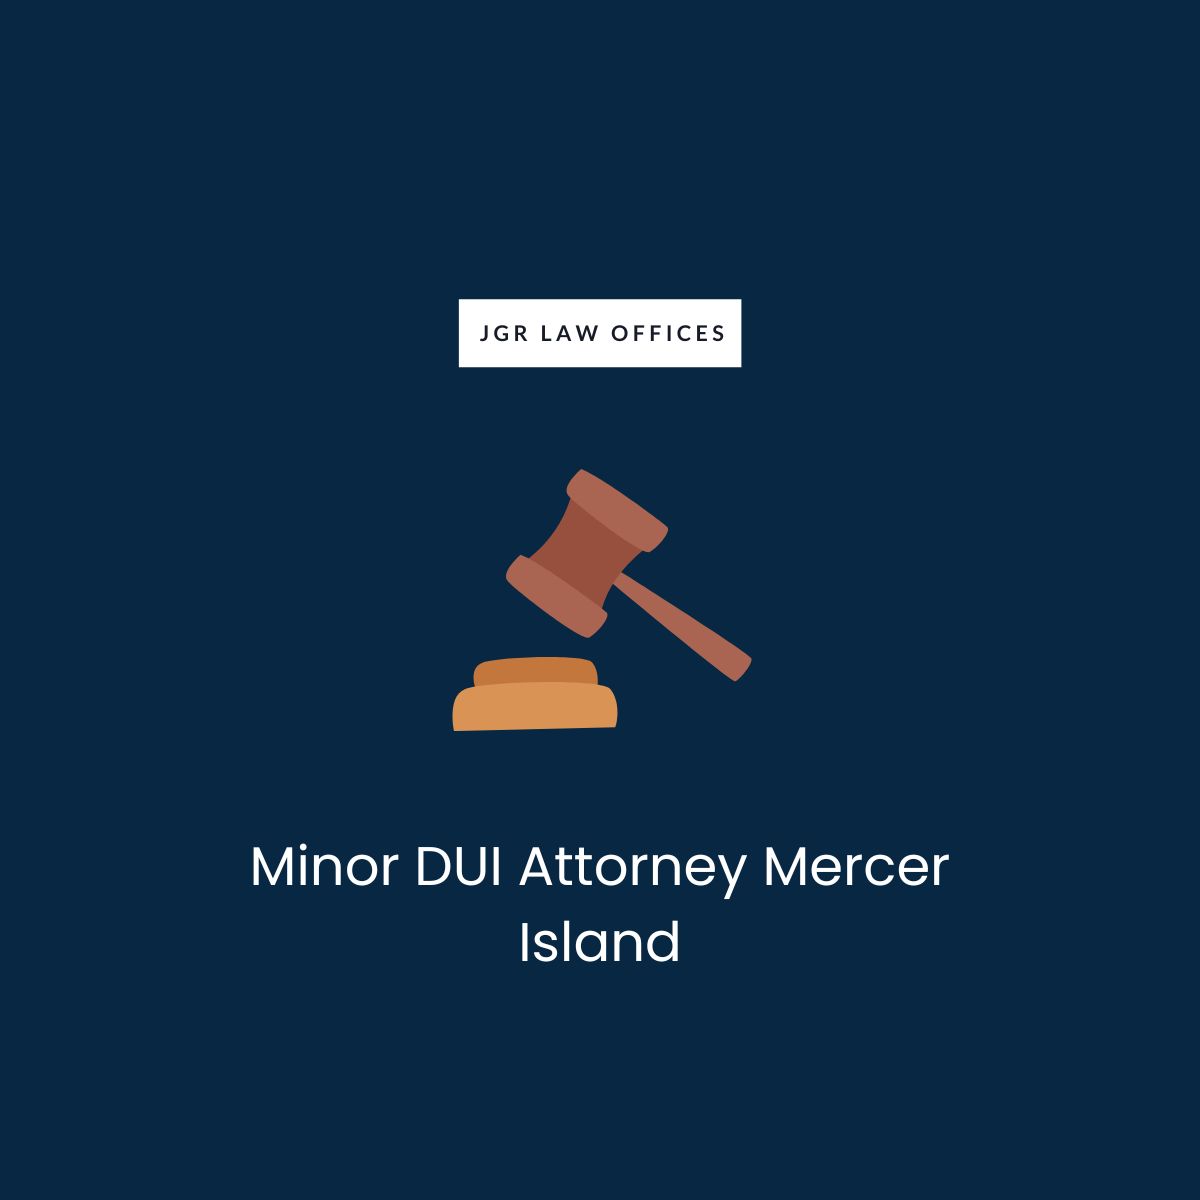 Minor DUI Lawyer Mercer Island Minor DUI Minor DUI